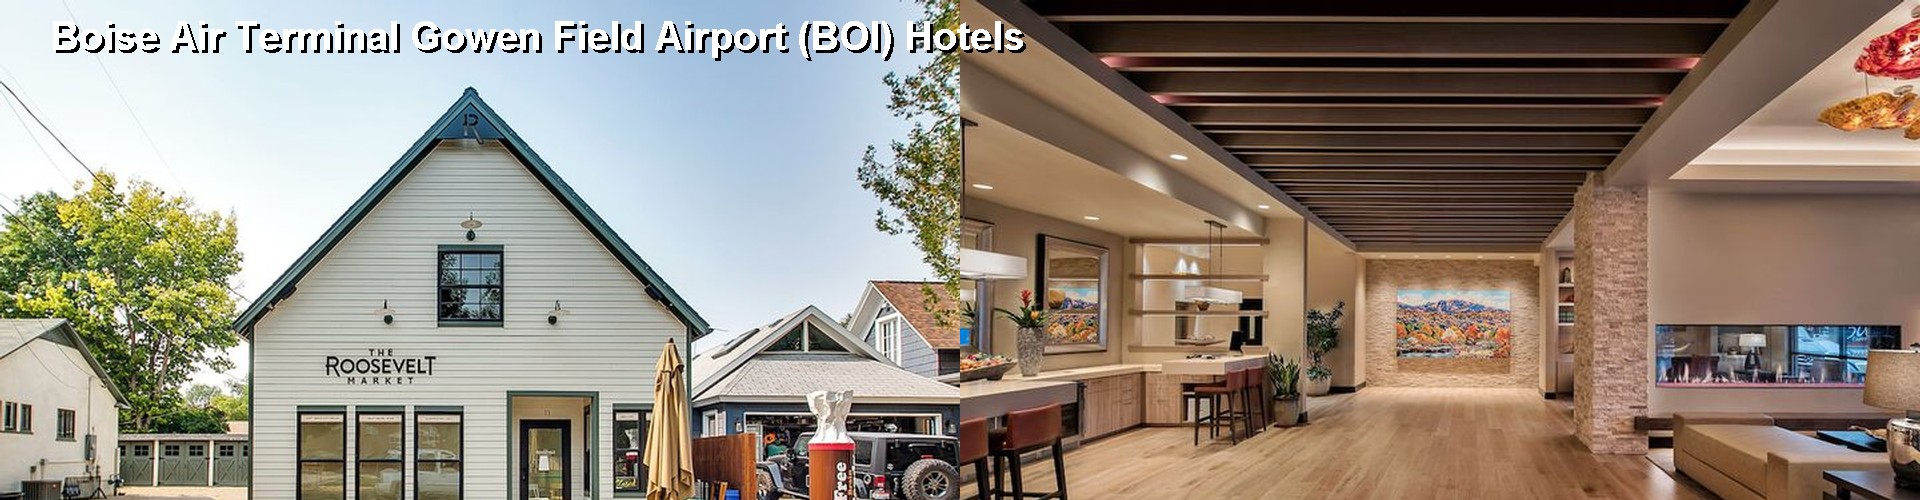 5 Best Hotels near Boise Air Terminal Gowen Field Airport (BOI)